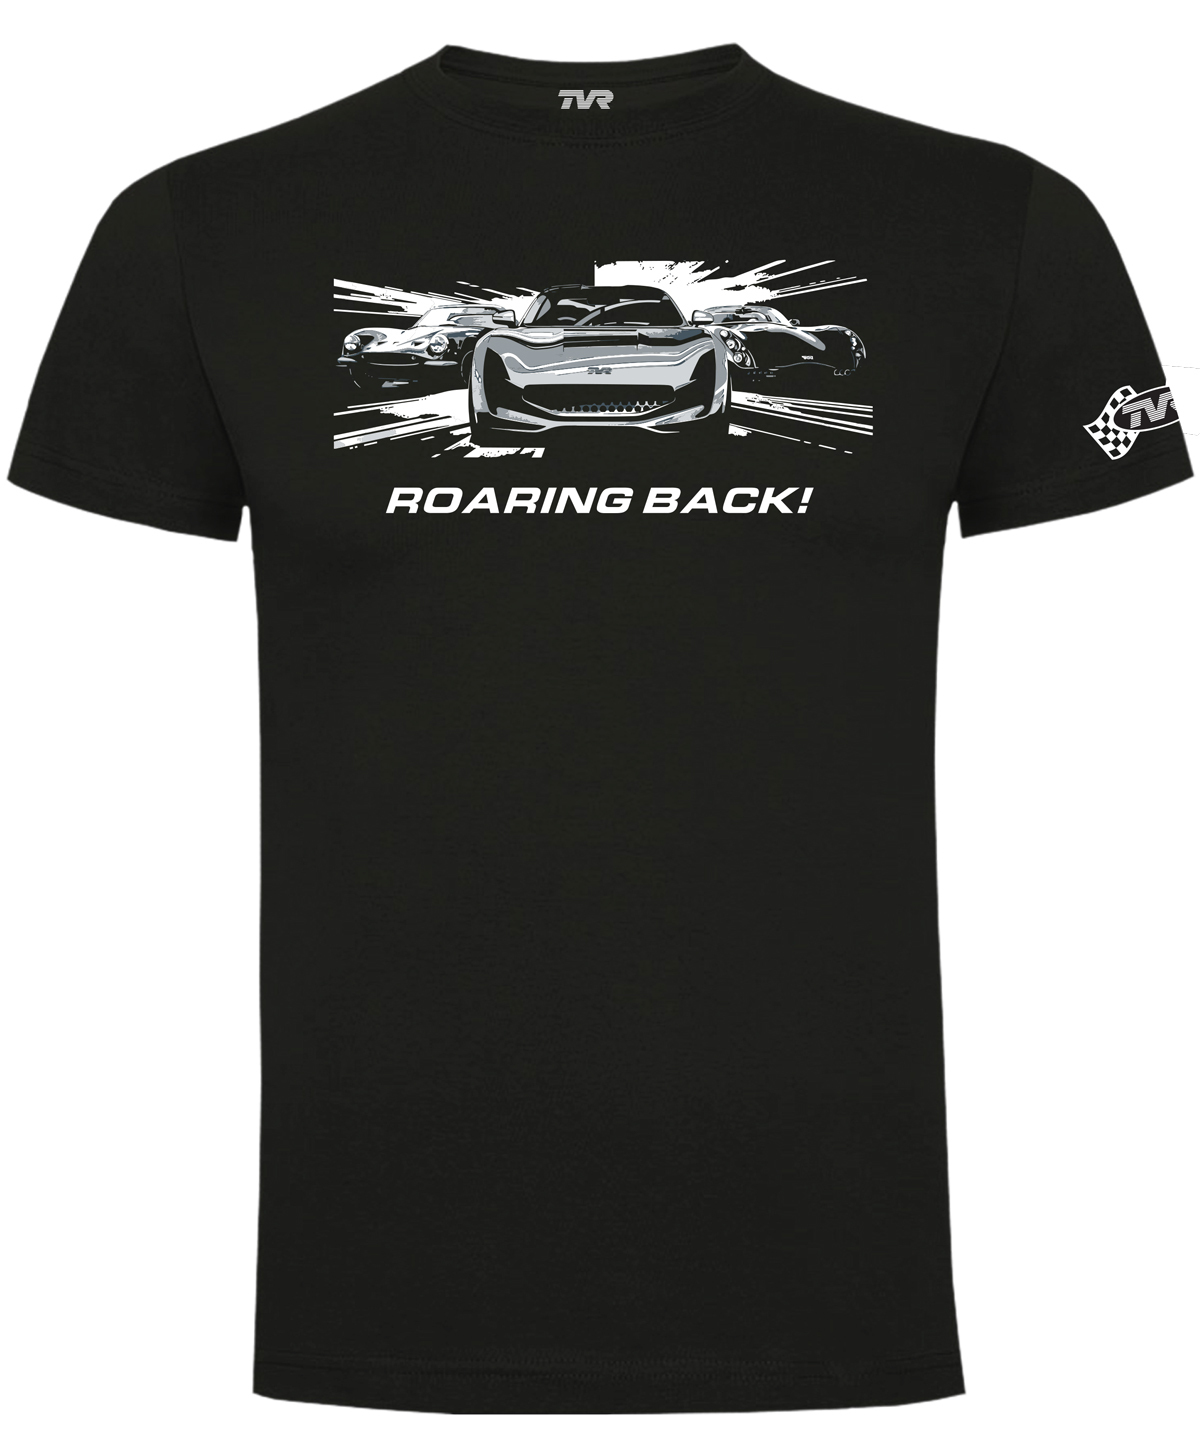 TVR 3 Cars “Roaring Back” T-Shirt BLACK